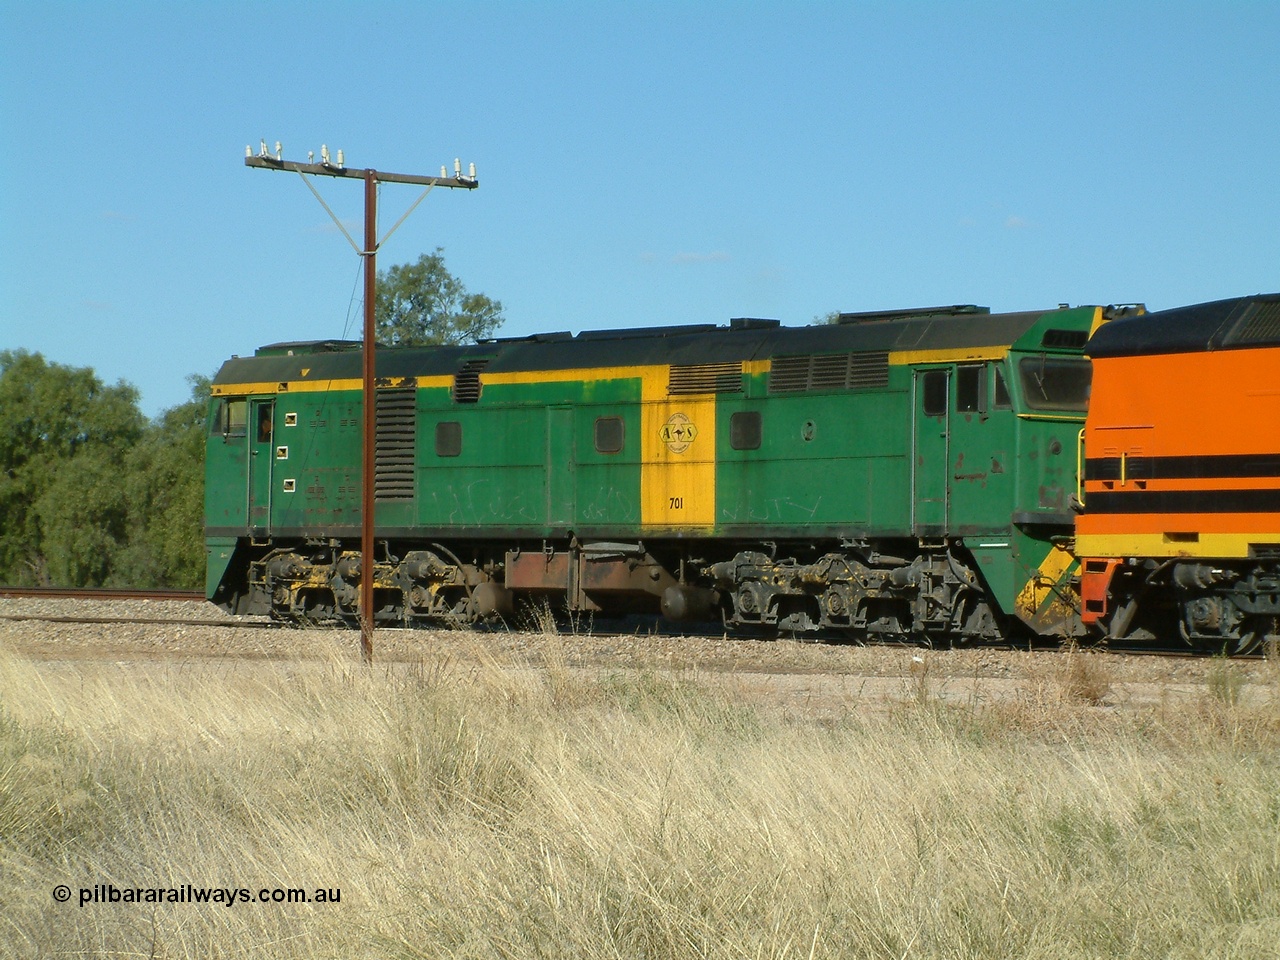 030403 153816
Gladstone, former South Australian Railways AE Goodwin built DL500G ALCo designated the 700 class, class leader 701 serial G6042-2 leads a grain train being loaded on the 3rd April 2003.
Keywords: 700-class;701;AE-Goodwin;ALCo;DL500G;G6042-2;